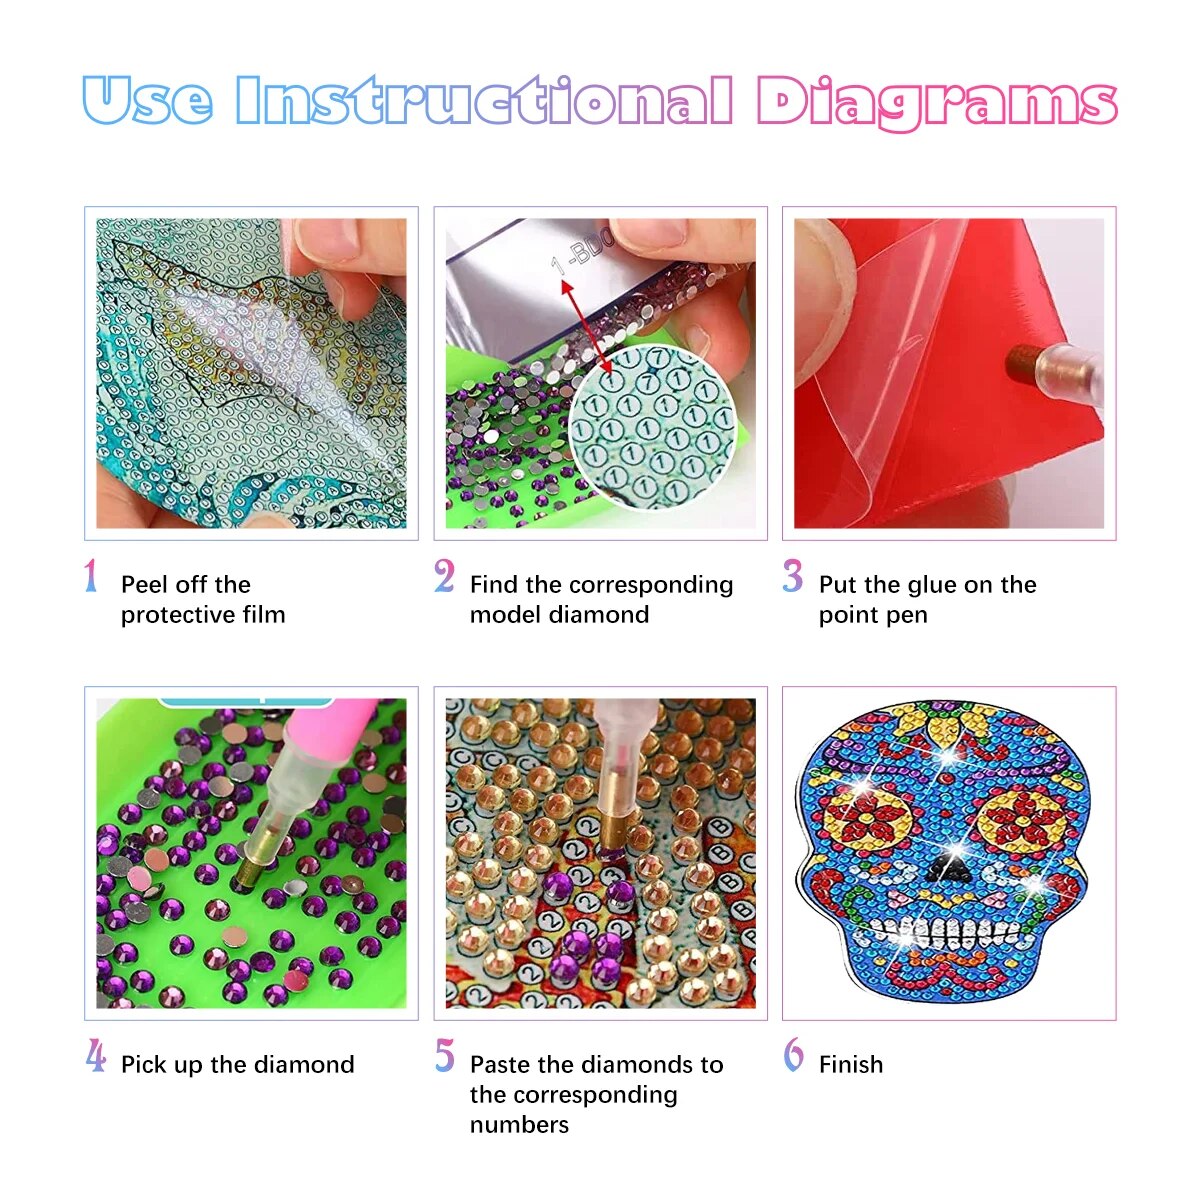 10pc/Sets Diamond Painting Coasters Kits With Holder - Halloween Sugar Skulls